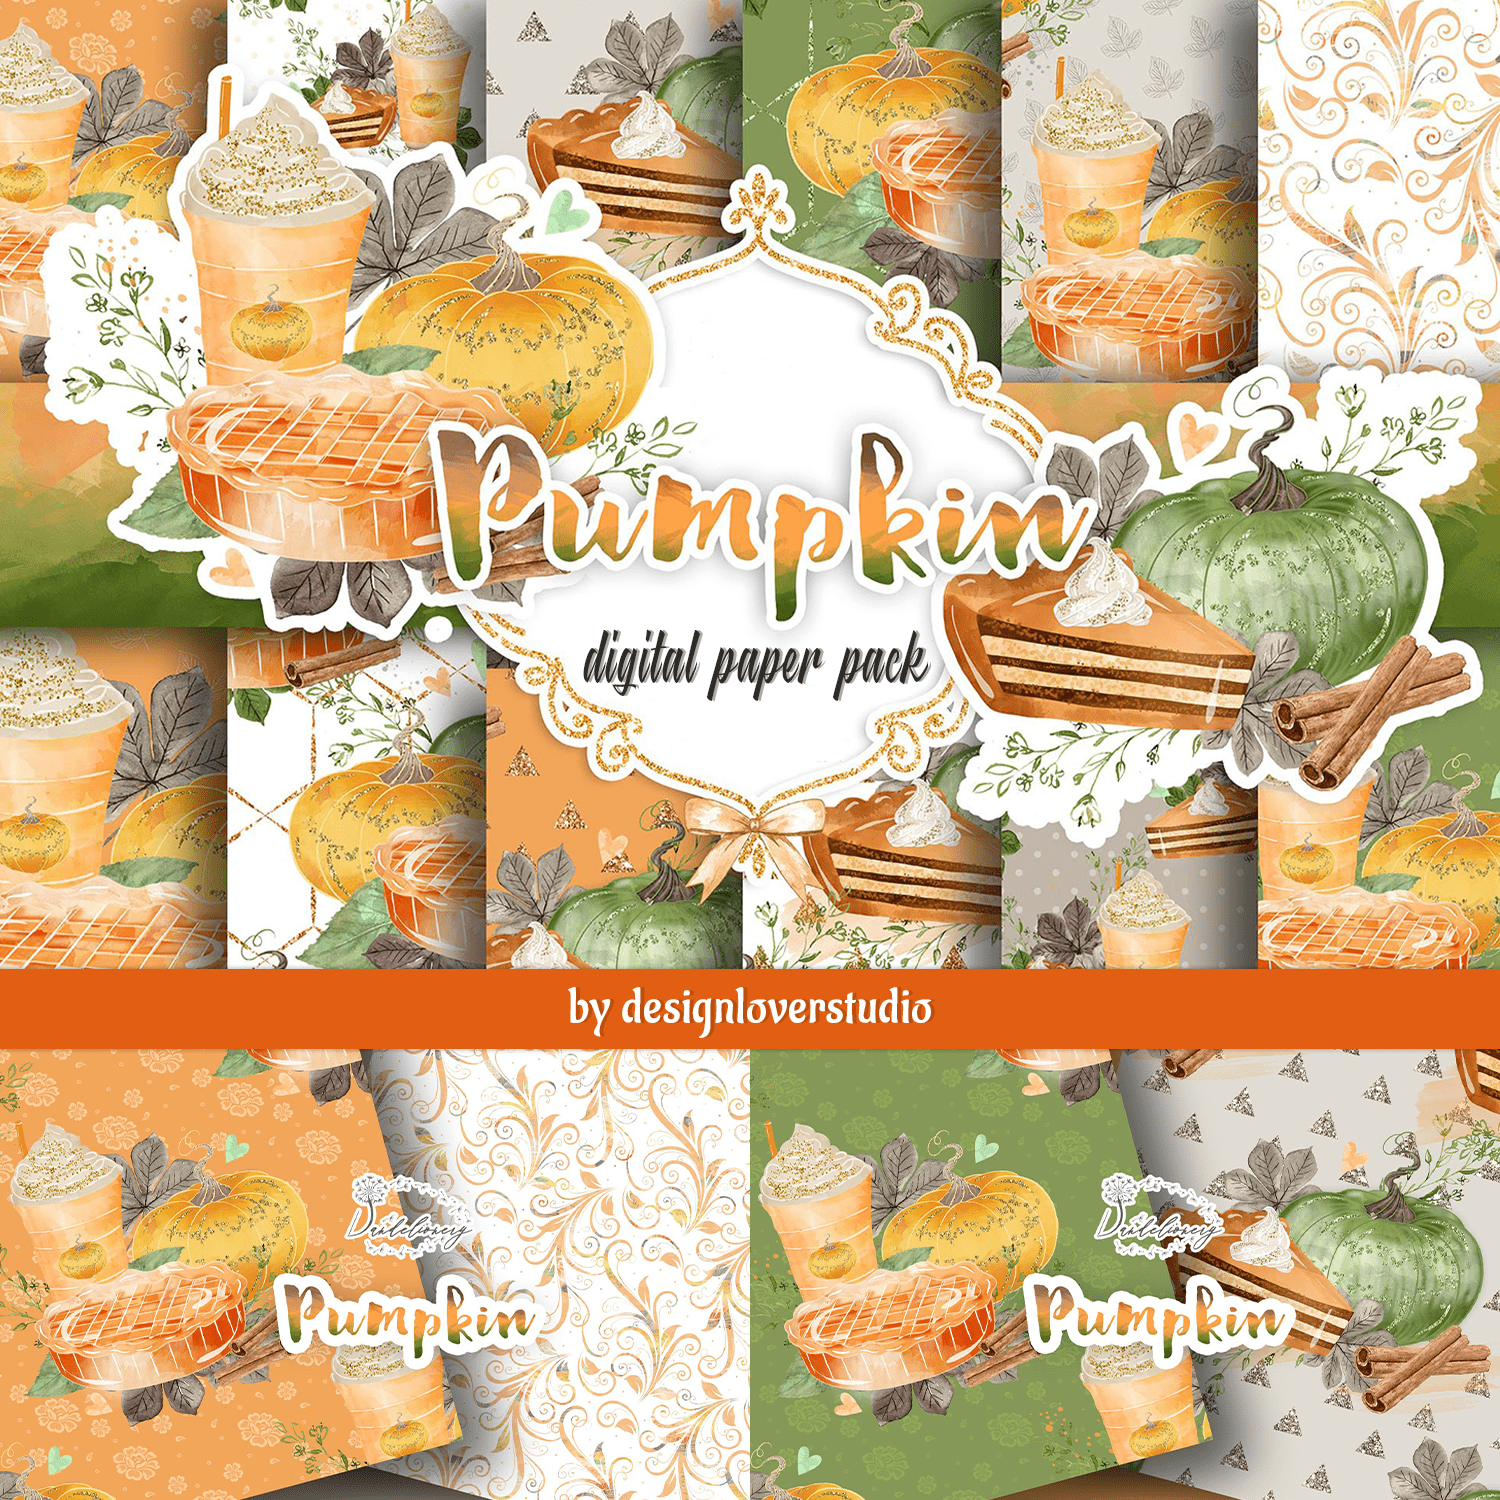 Pumpkin digital papaer pack cover.